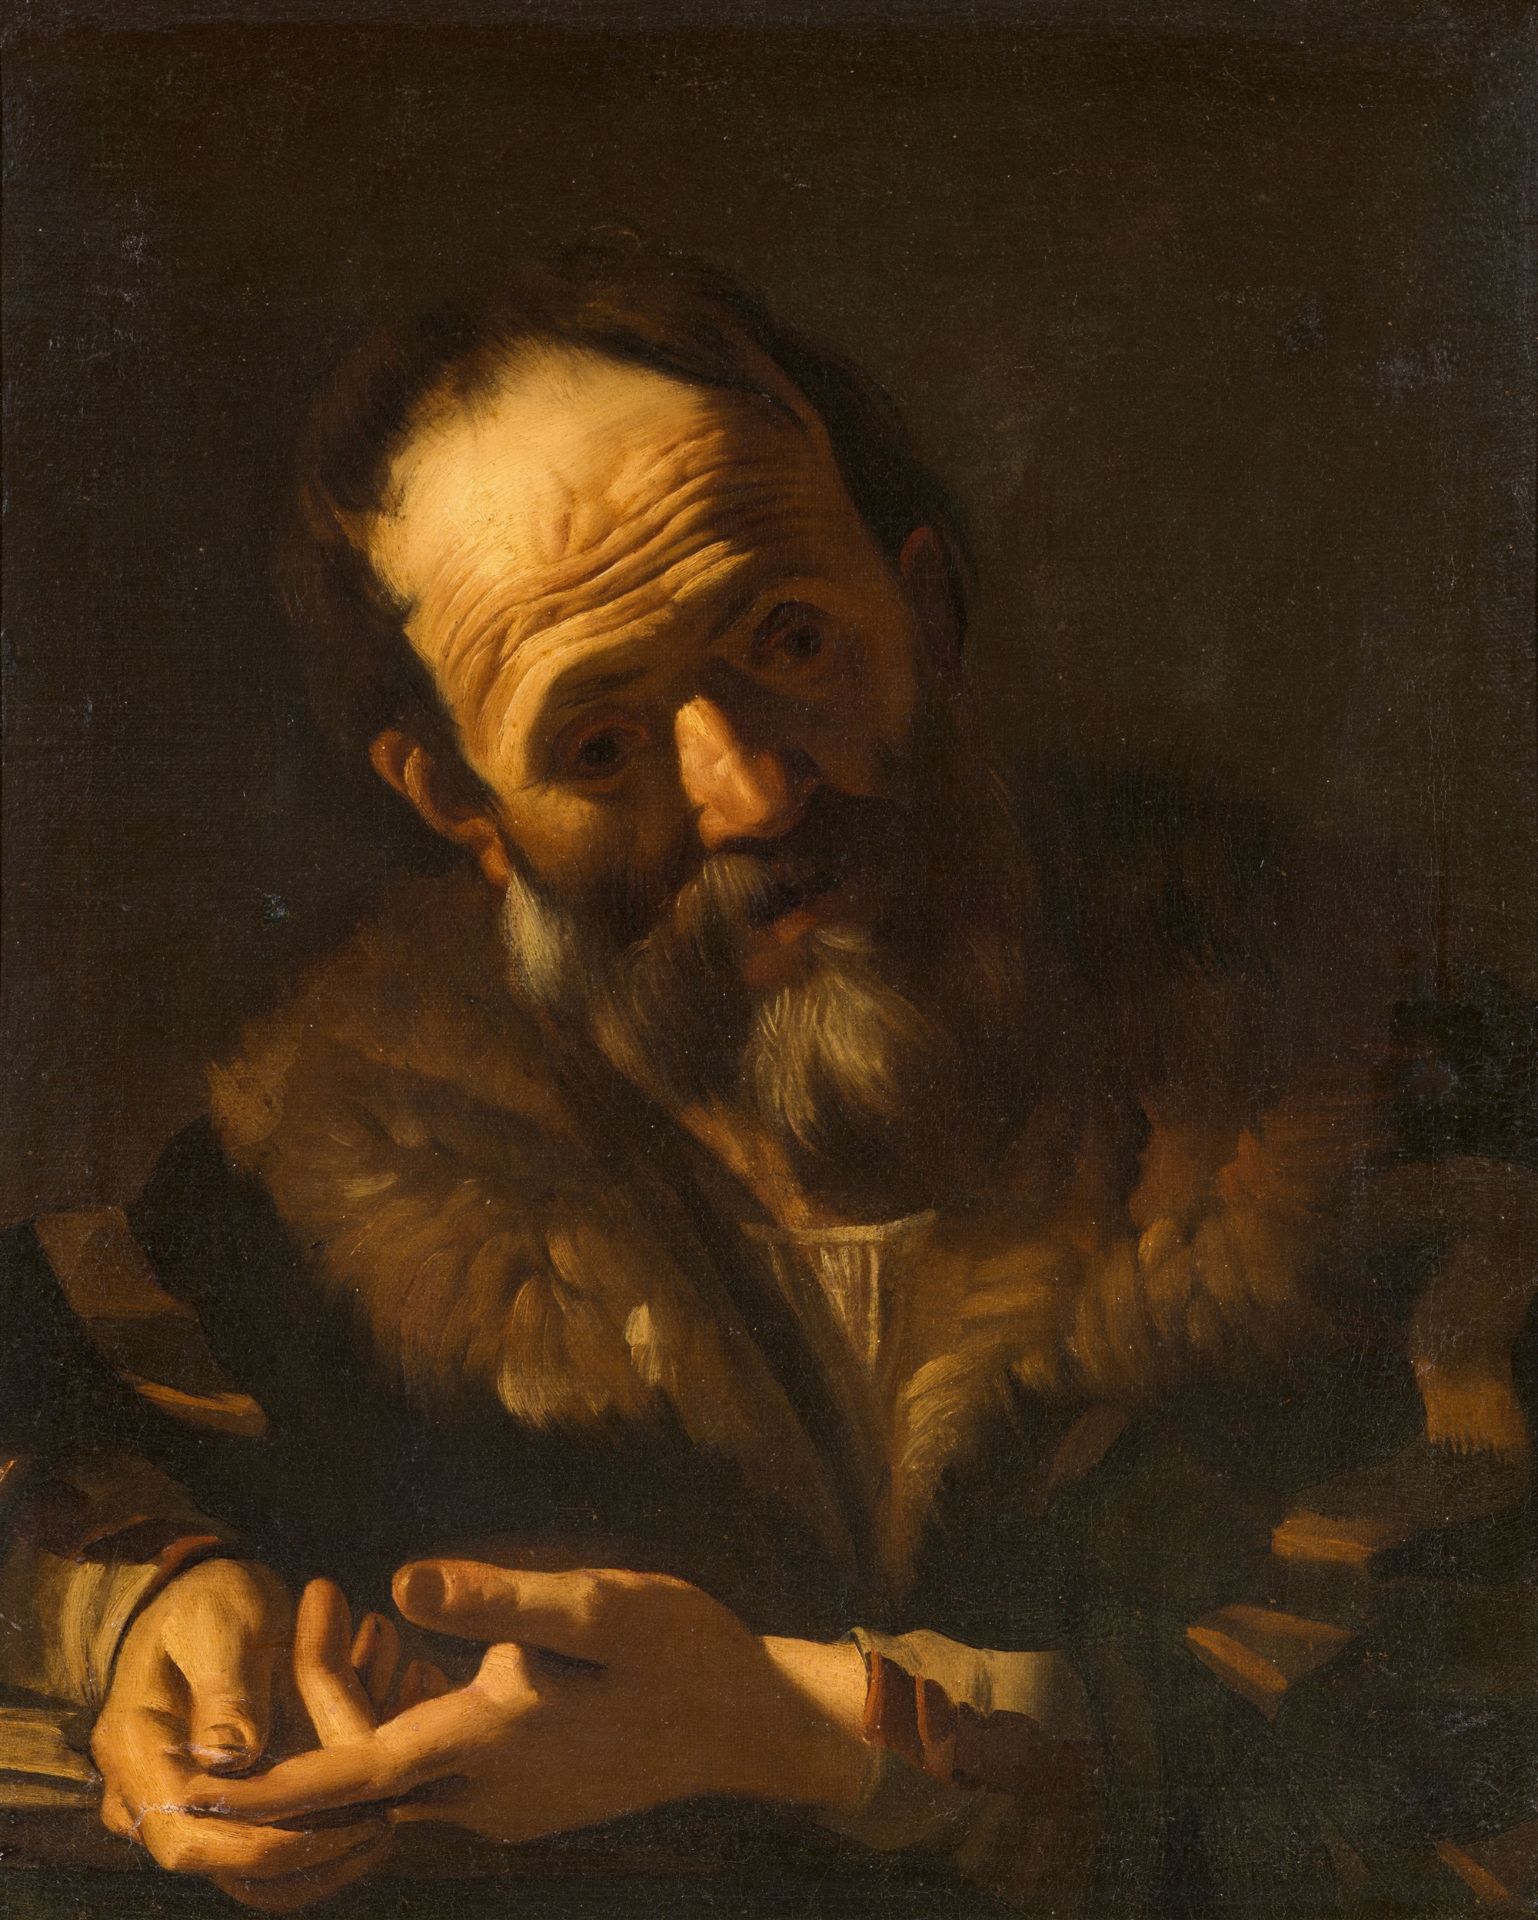 Italian Caravaggist early 17th century, Portrait of a Philosopher